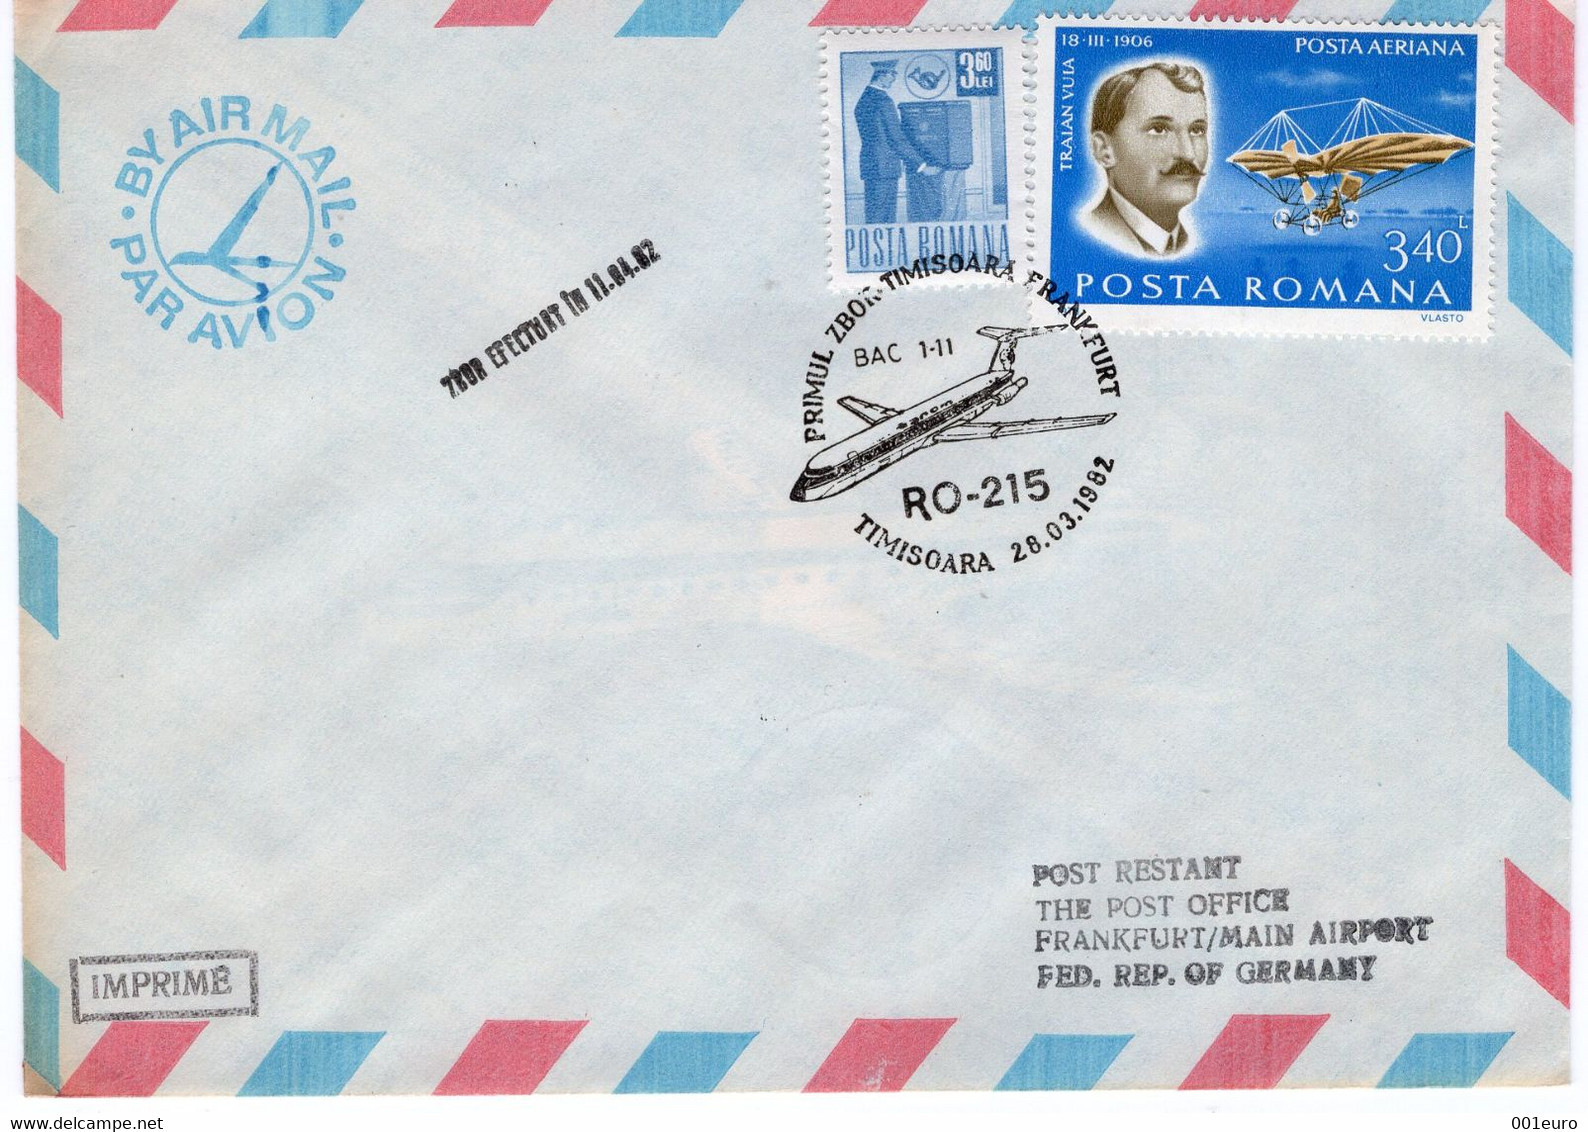 ROMANIA 1982: AEROPHILATELY - FLIGHT TIMISOARA - FRANKFURT, Illustrated Postmark On Cover  - Registered Shipping! - Storia Postale